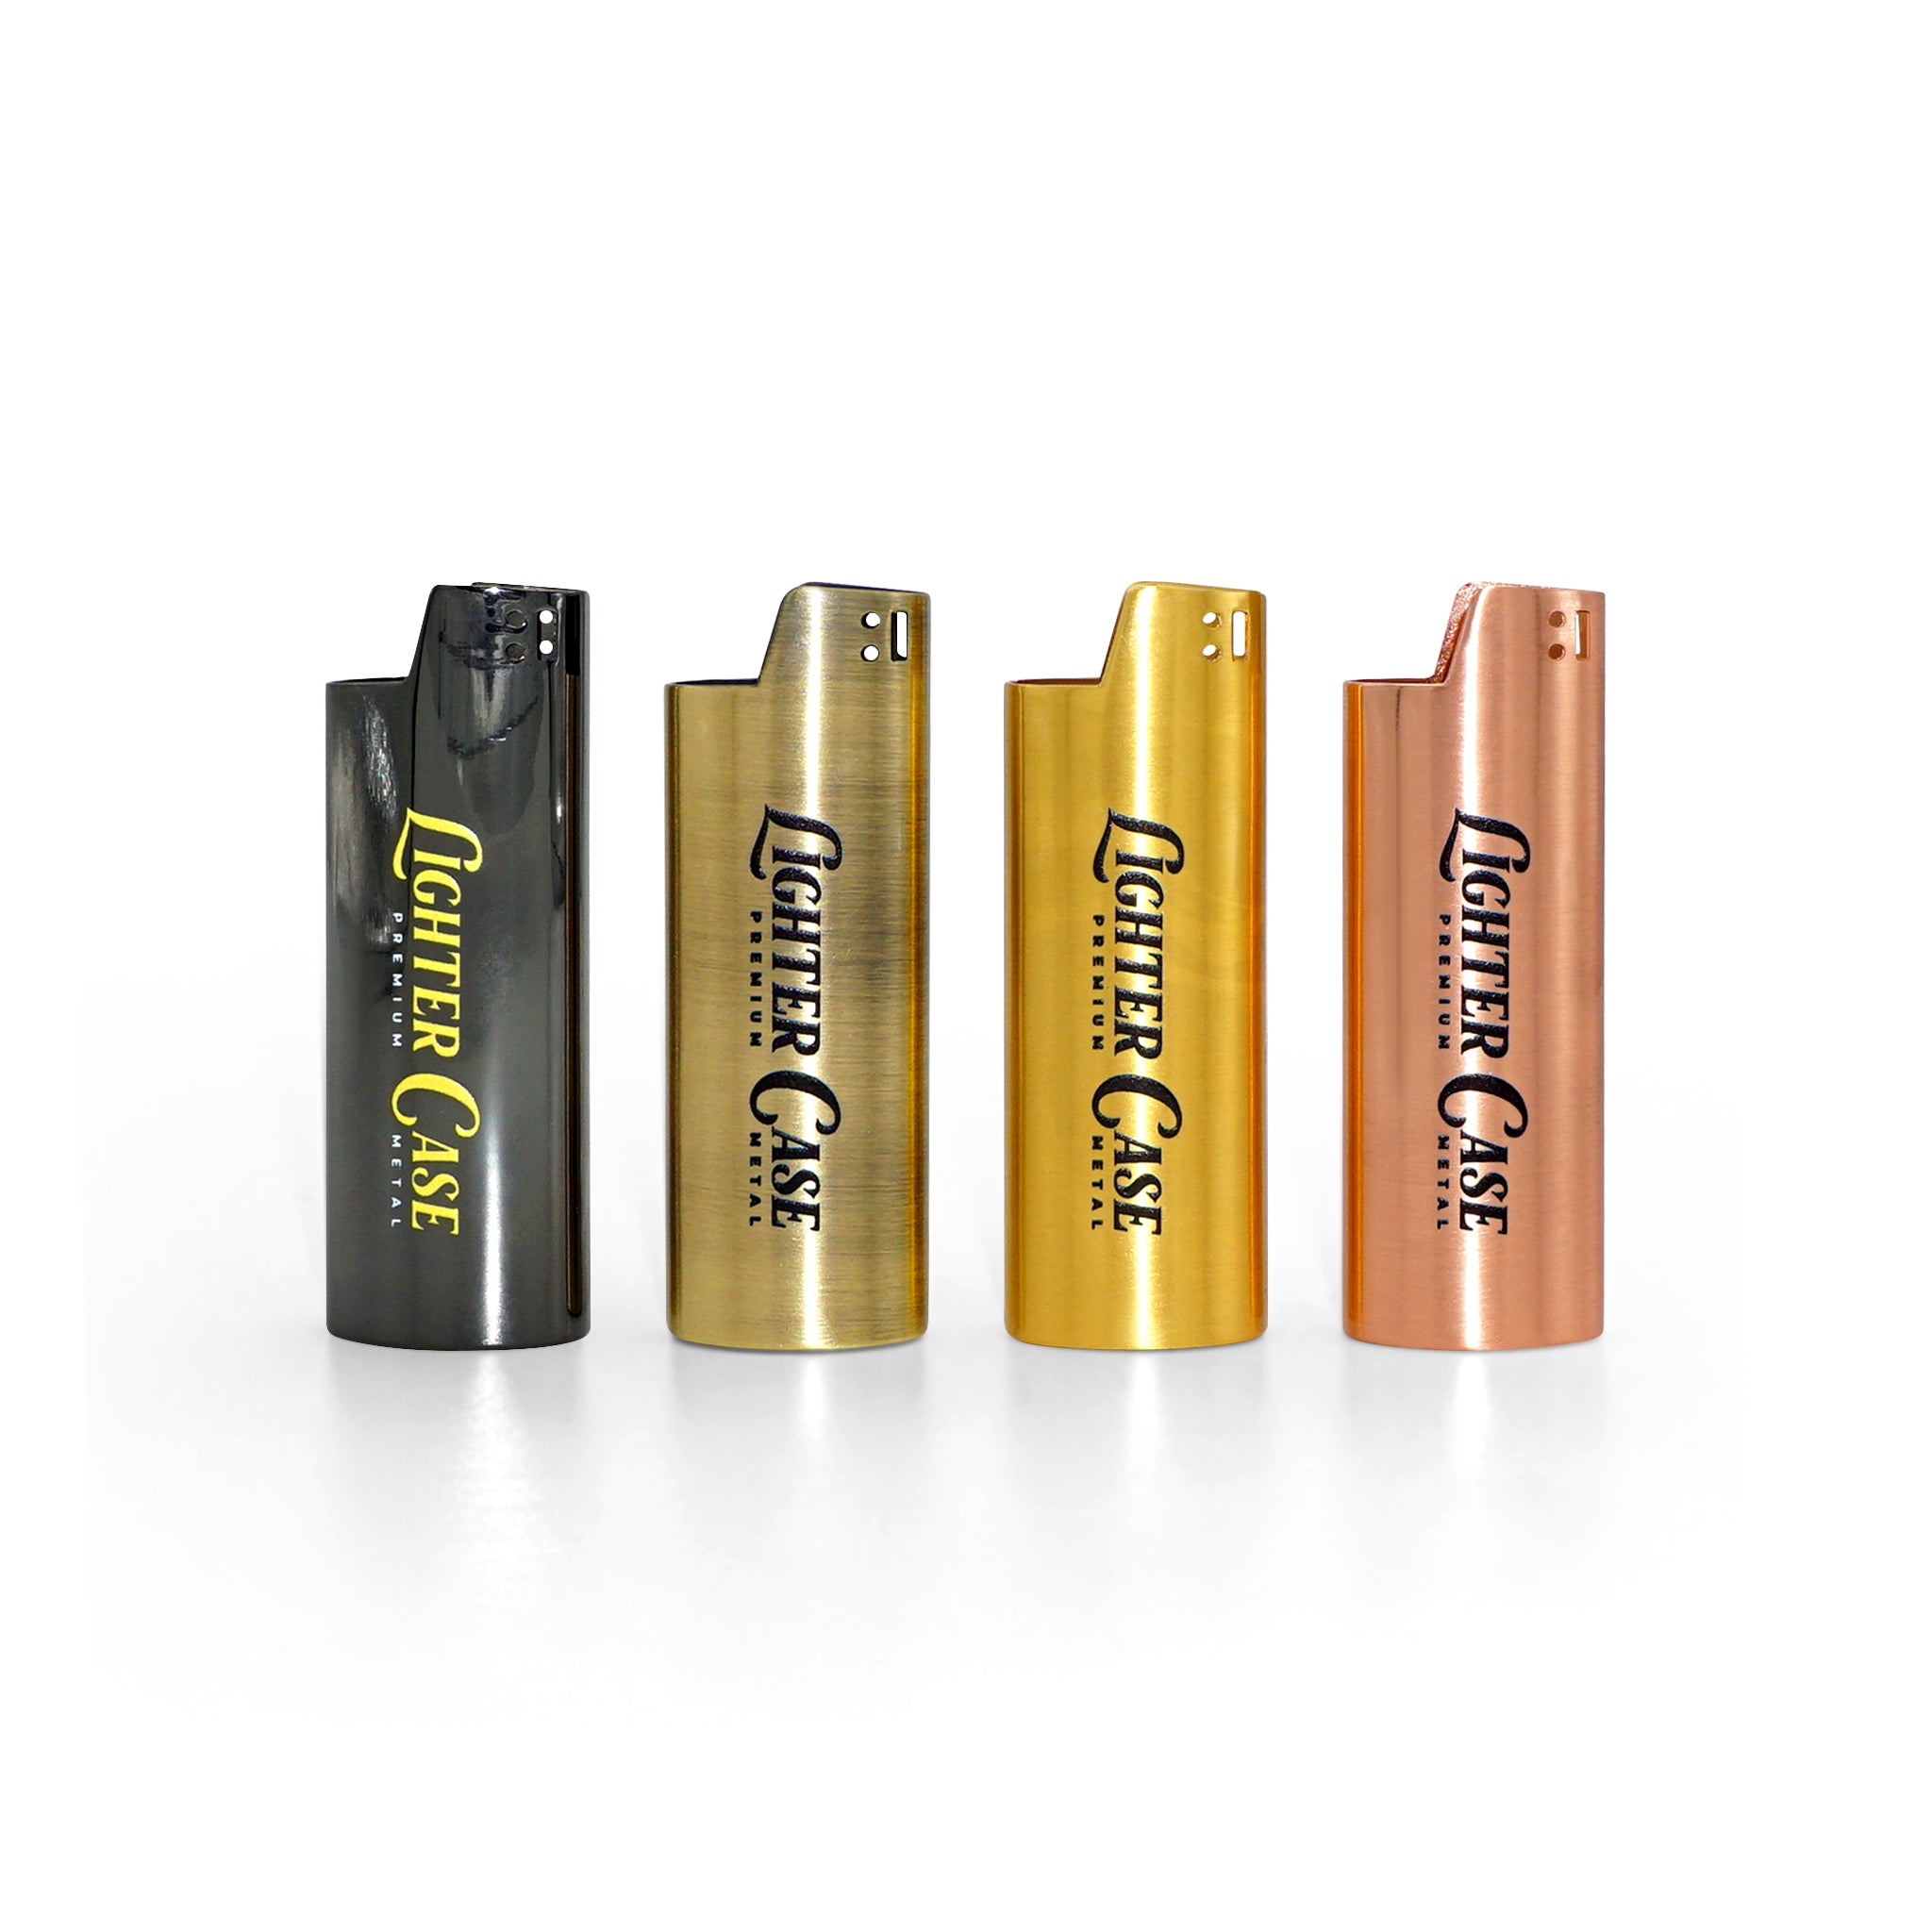 Blank Metal Lighter Case Customizable Reusable Lighter Case for Regular Bic J6 Lighters - 10 Pack (Silver)